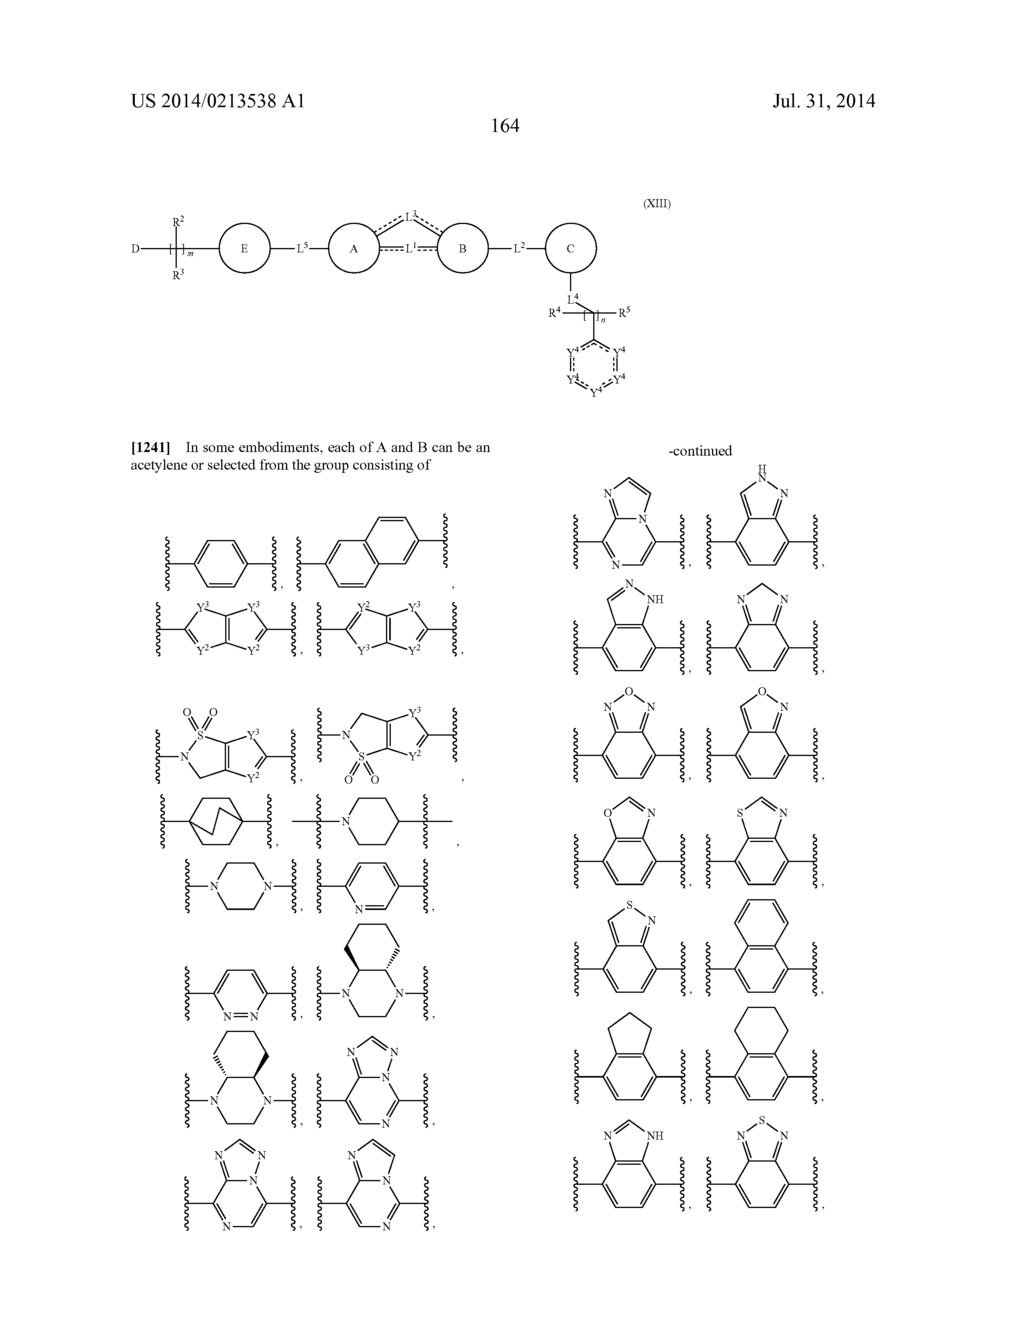 LYSOPHOSPHATIDIC ACID RECEPTOR ANTAGONISTS - diagram, schematic, and image 165